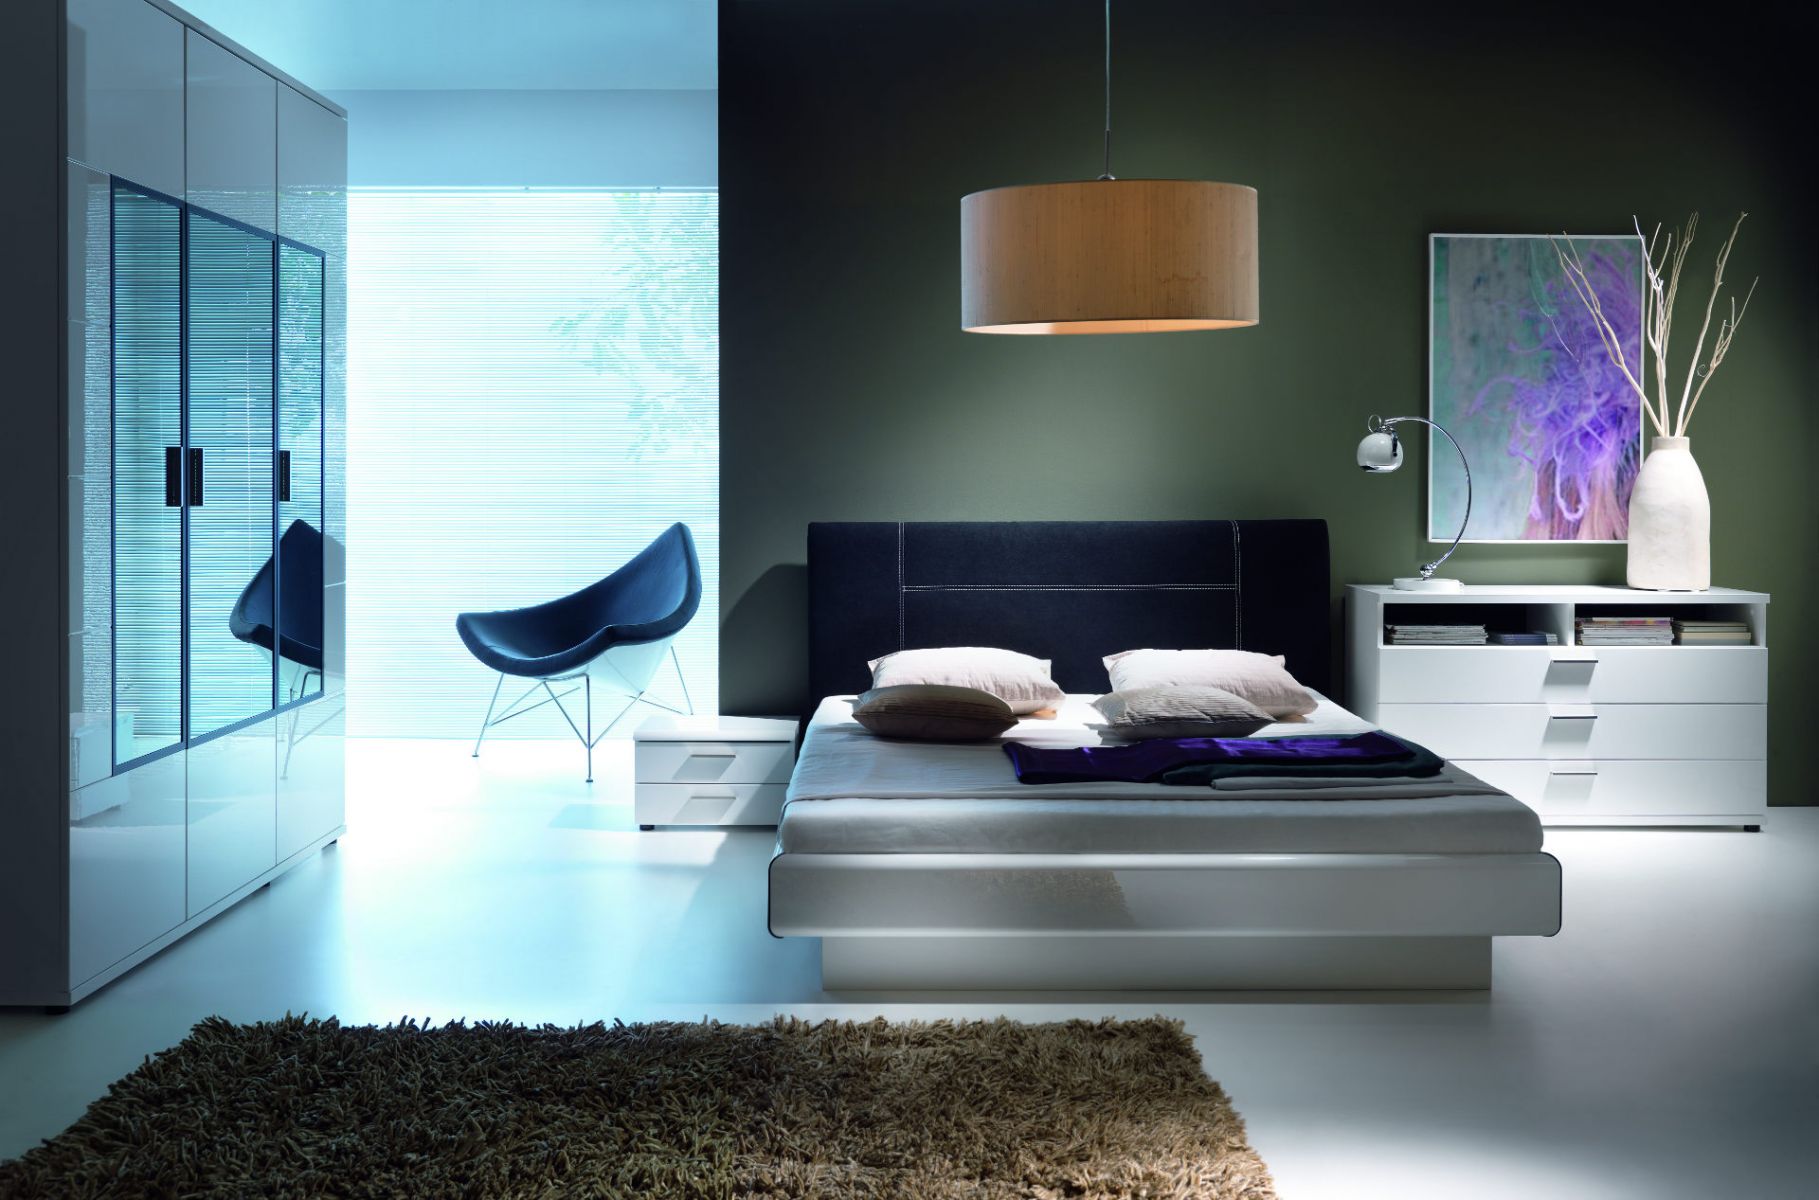 Современная мебель спальни фото. Спальня "Corano". Стильная мебель для спальни. Спальня в современном стиле. Спальня Модерн.